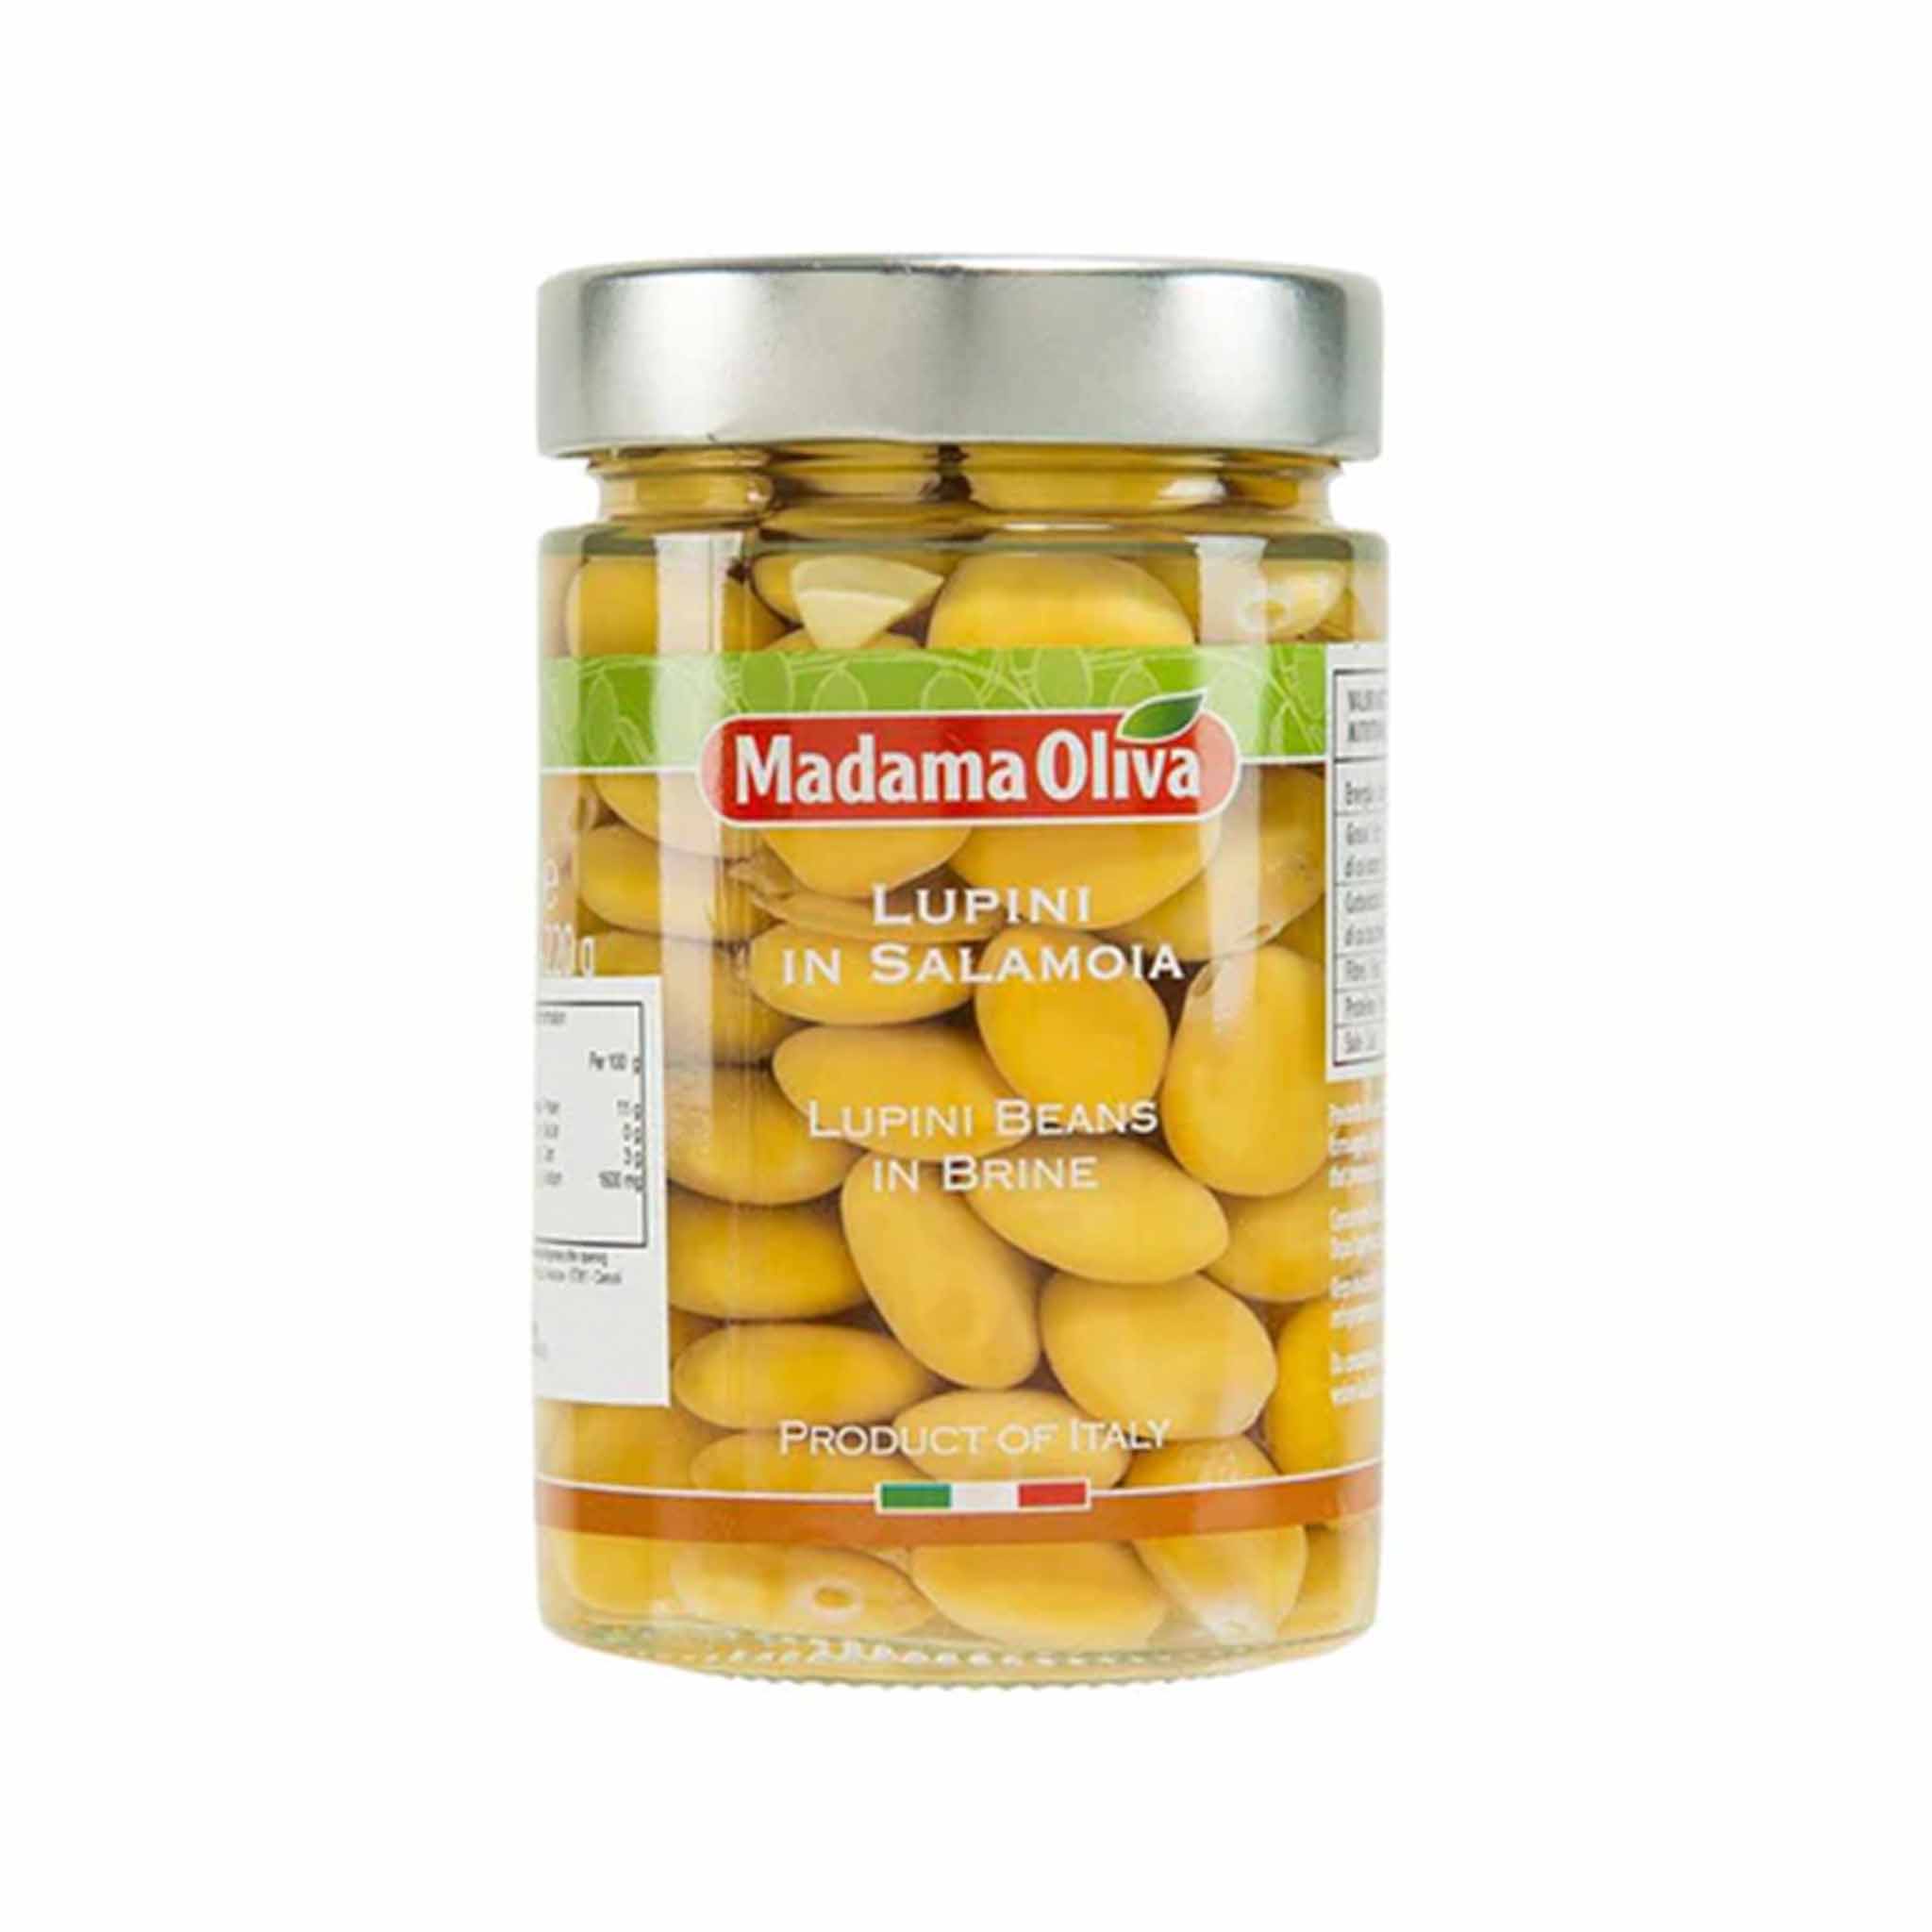 Madama Oliva Lupini Beans in Brine